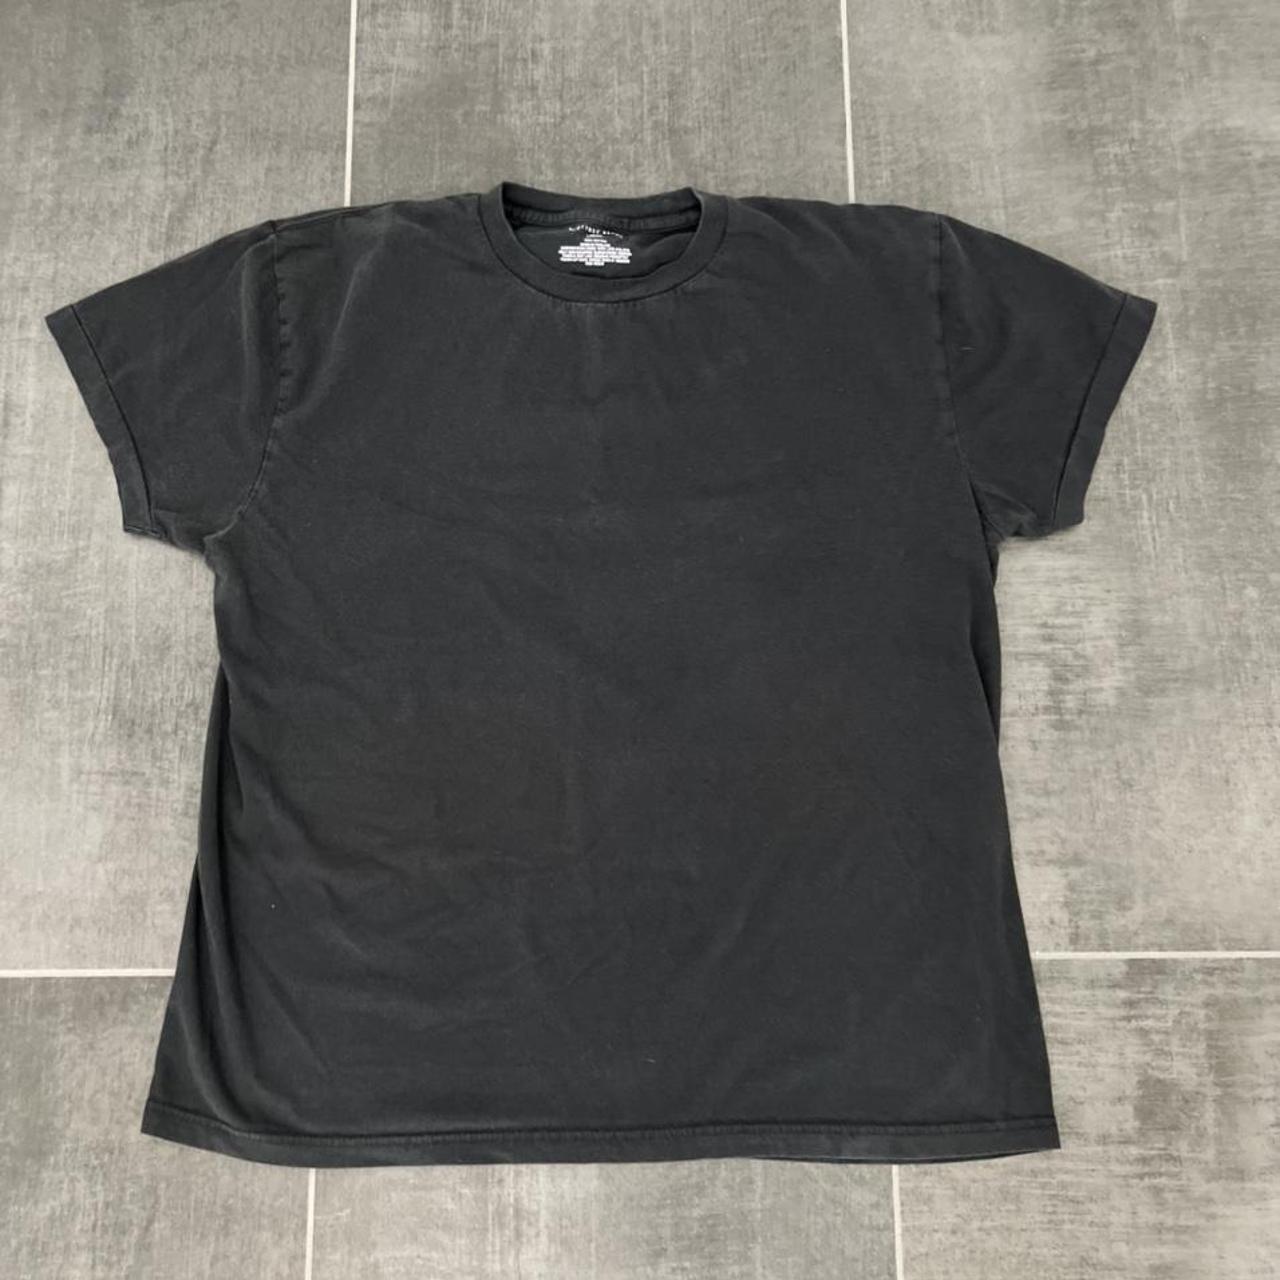 Product Image 1 - Geoffrey Beane All Black T-Shirt
-L
-Single